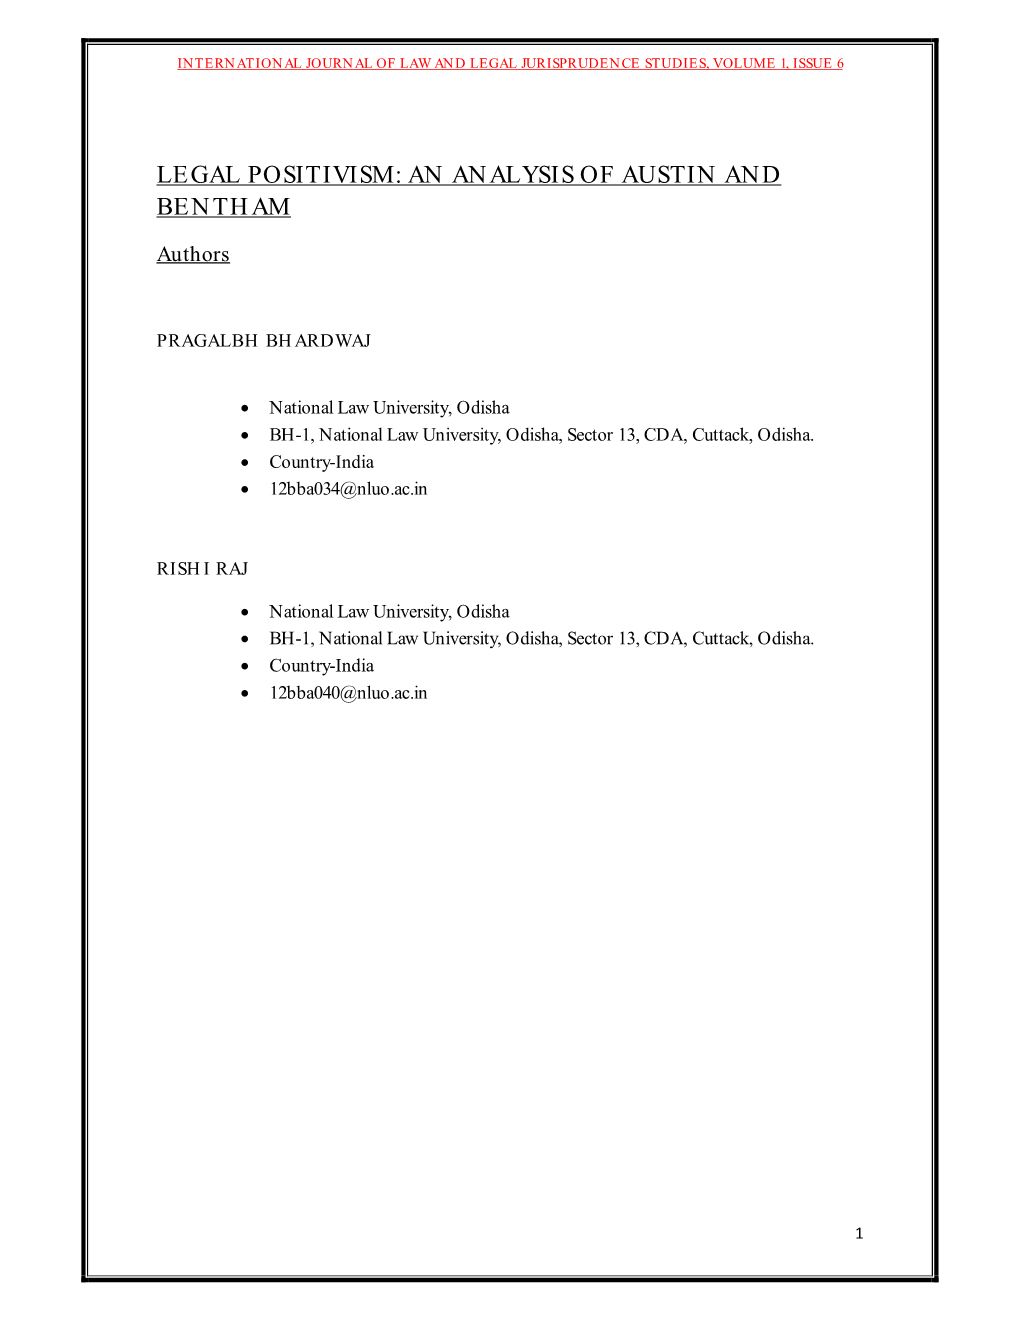 Legal Positivism: an Analysis of Austin and Bentham